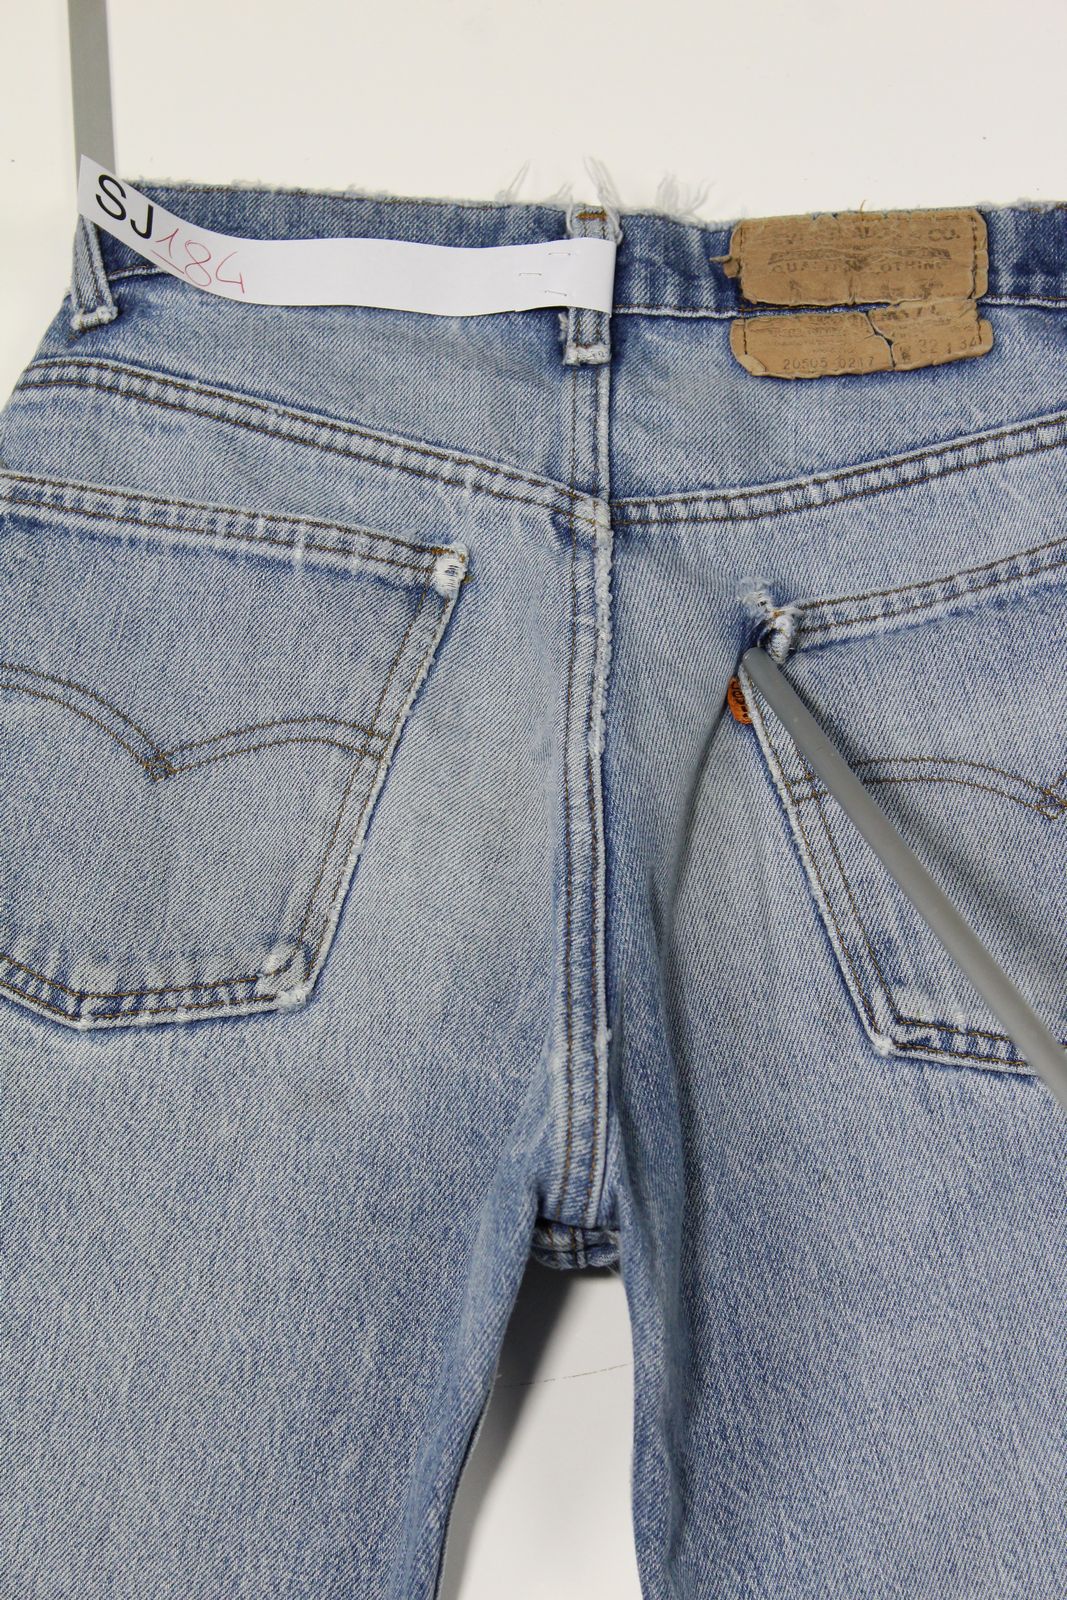 Levi's 505 Orange Tab Denim W32 L34 Made In USA Jeans Vintage